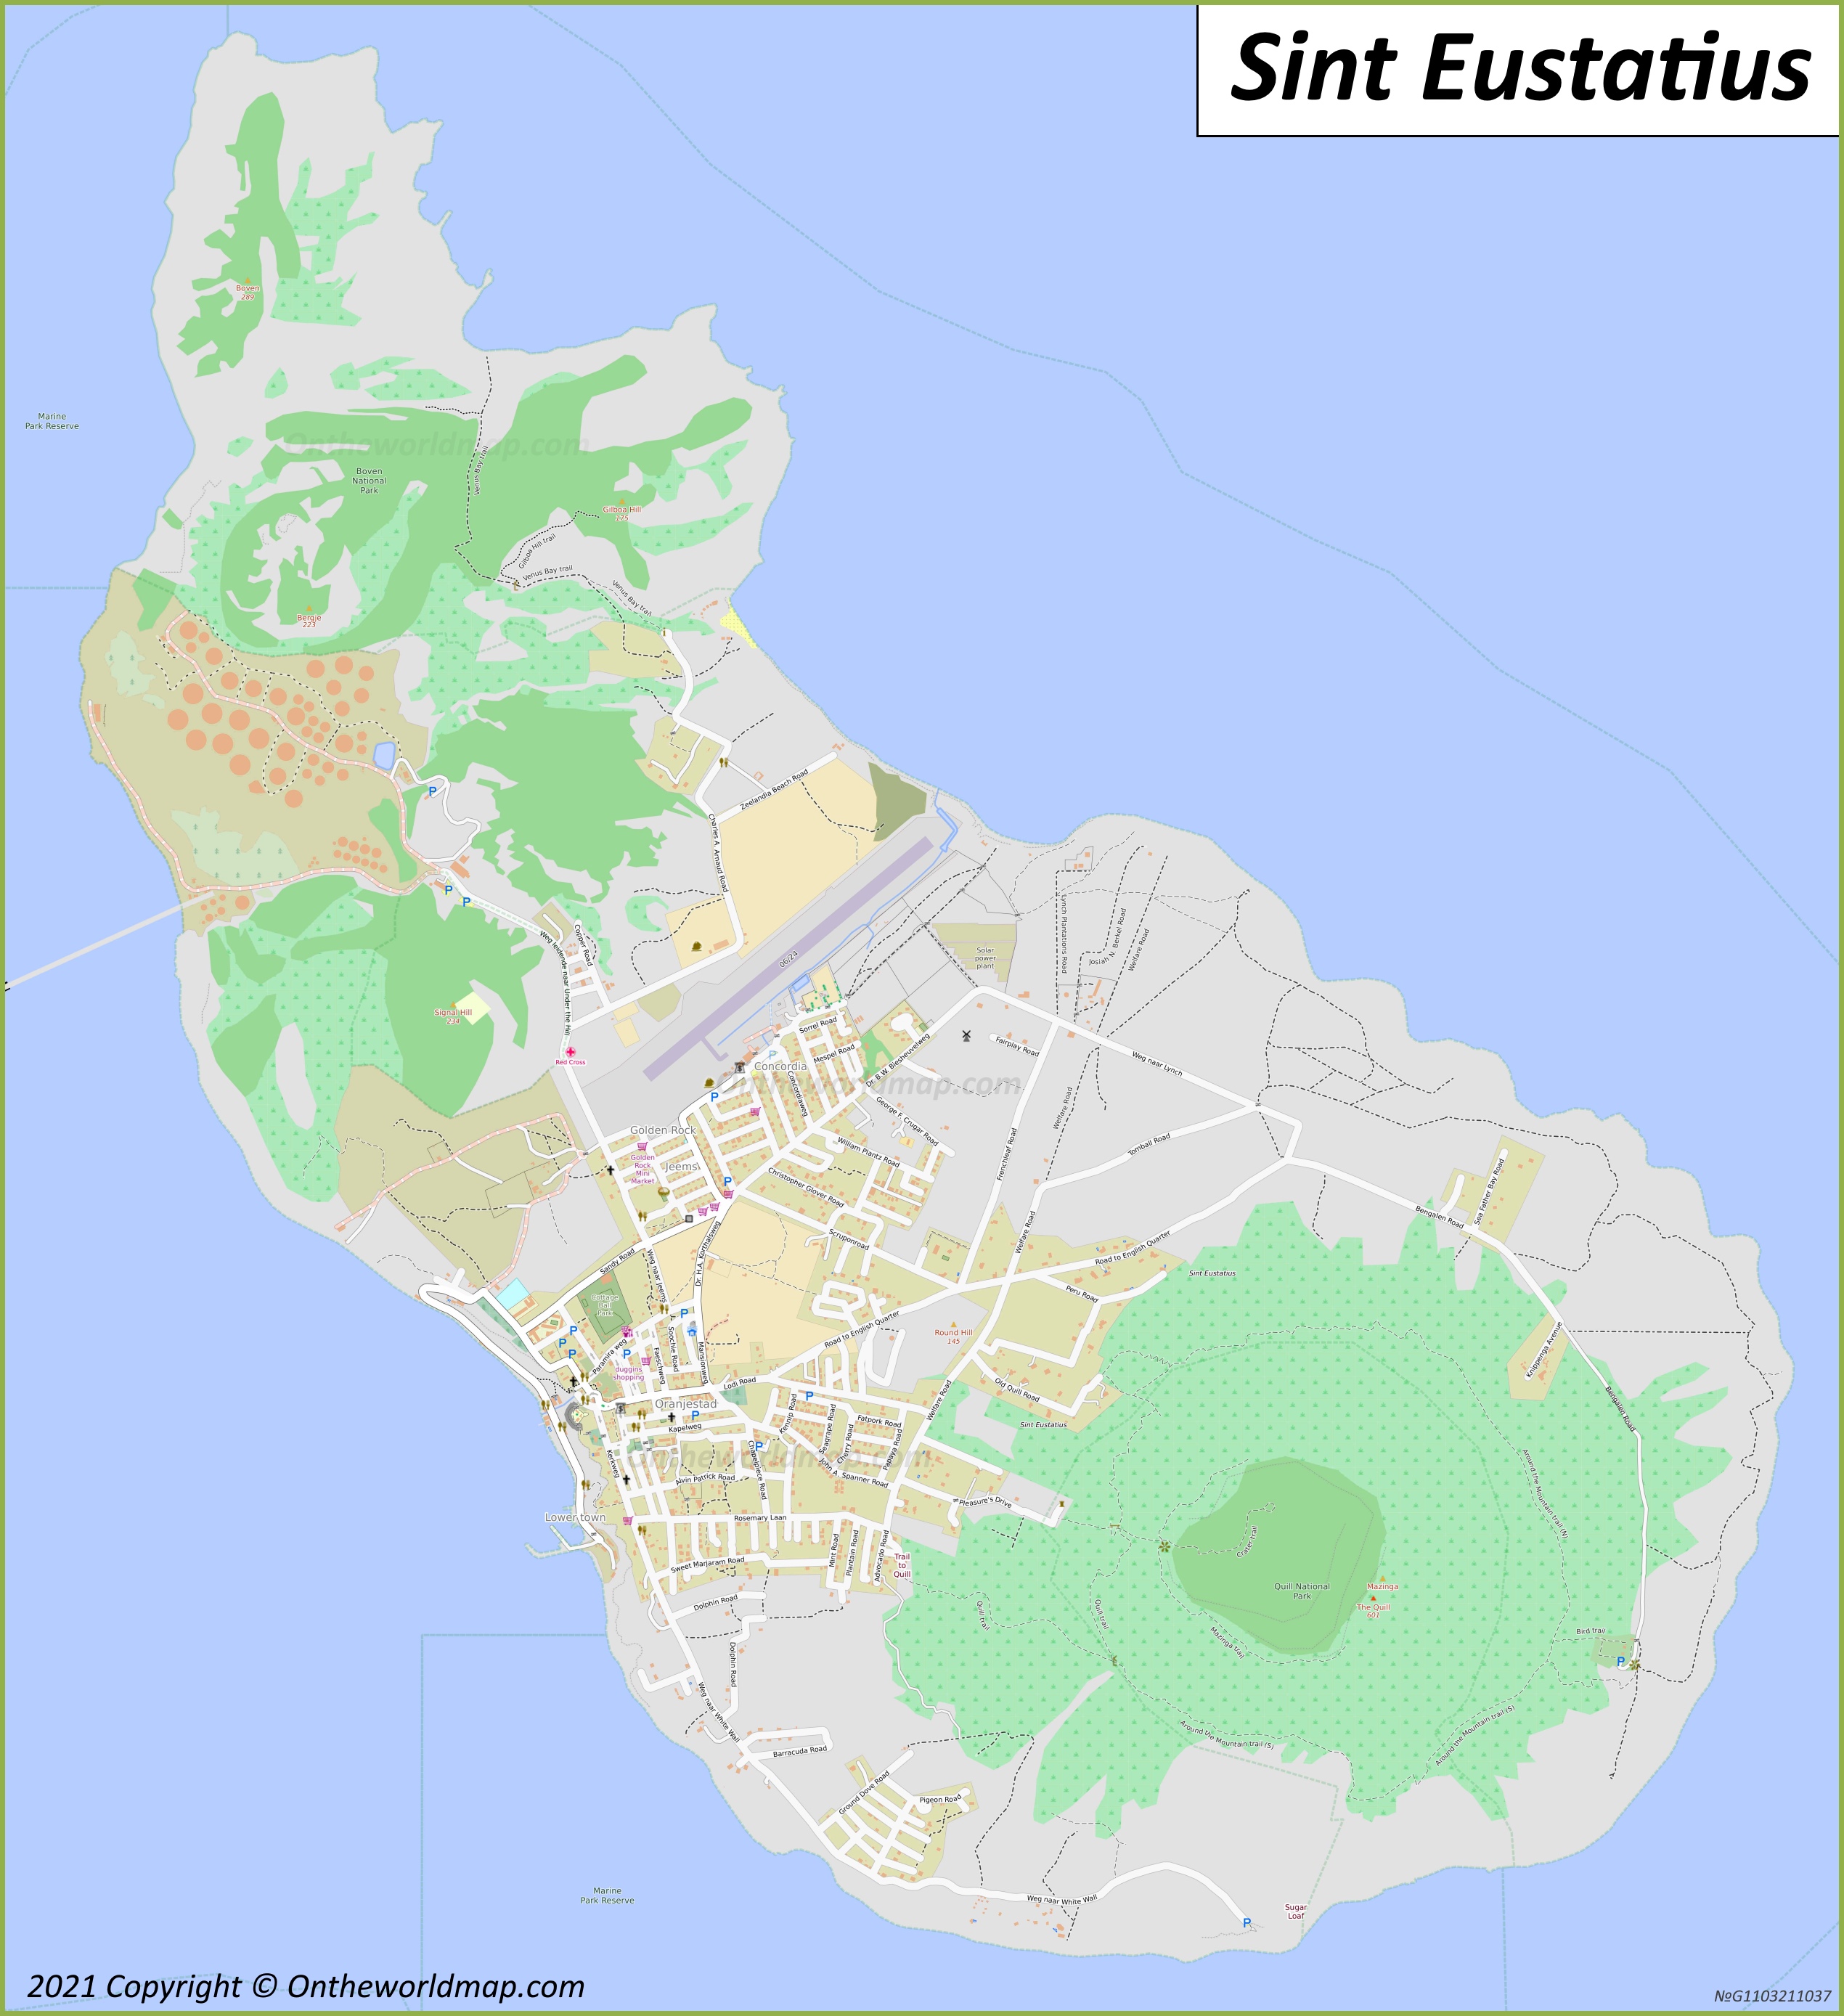 Detailed Map of Sint Eustatius Island